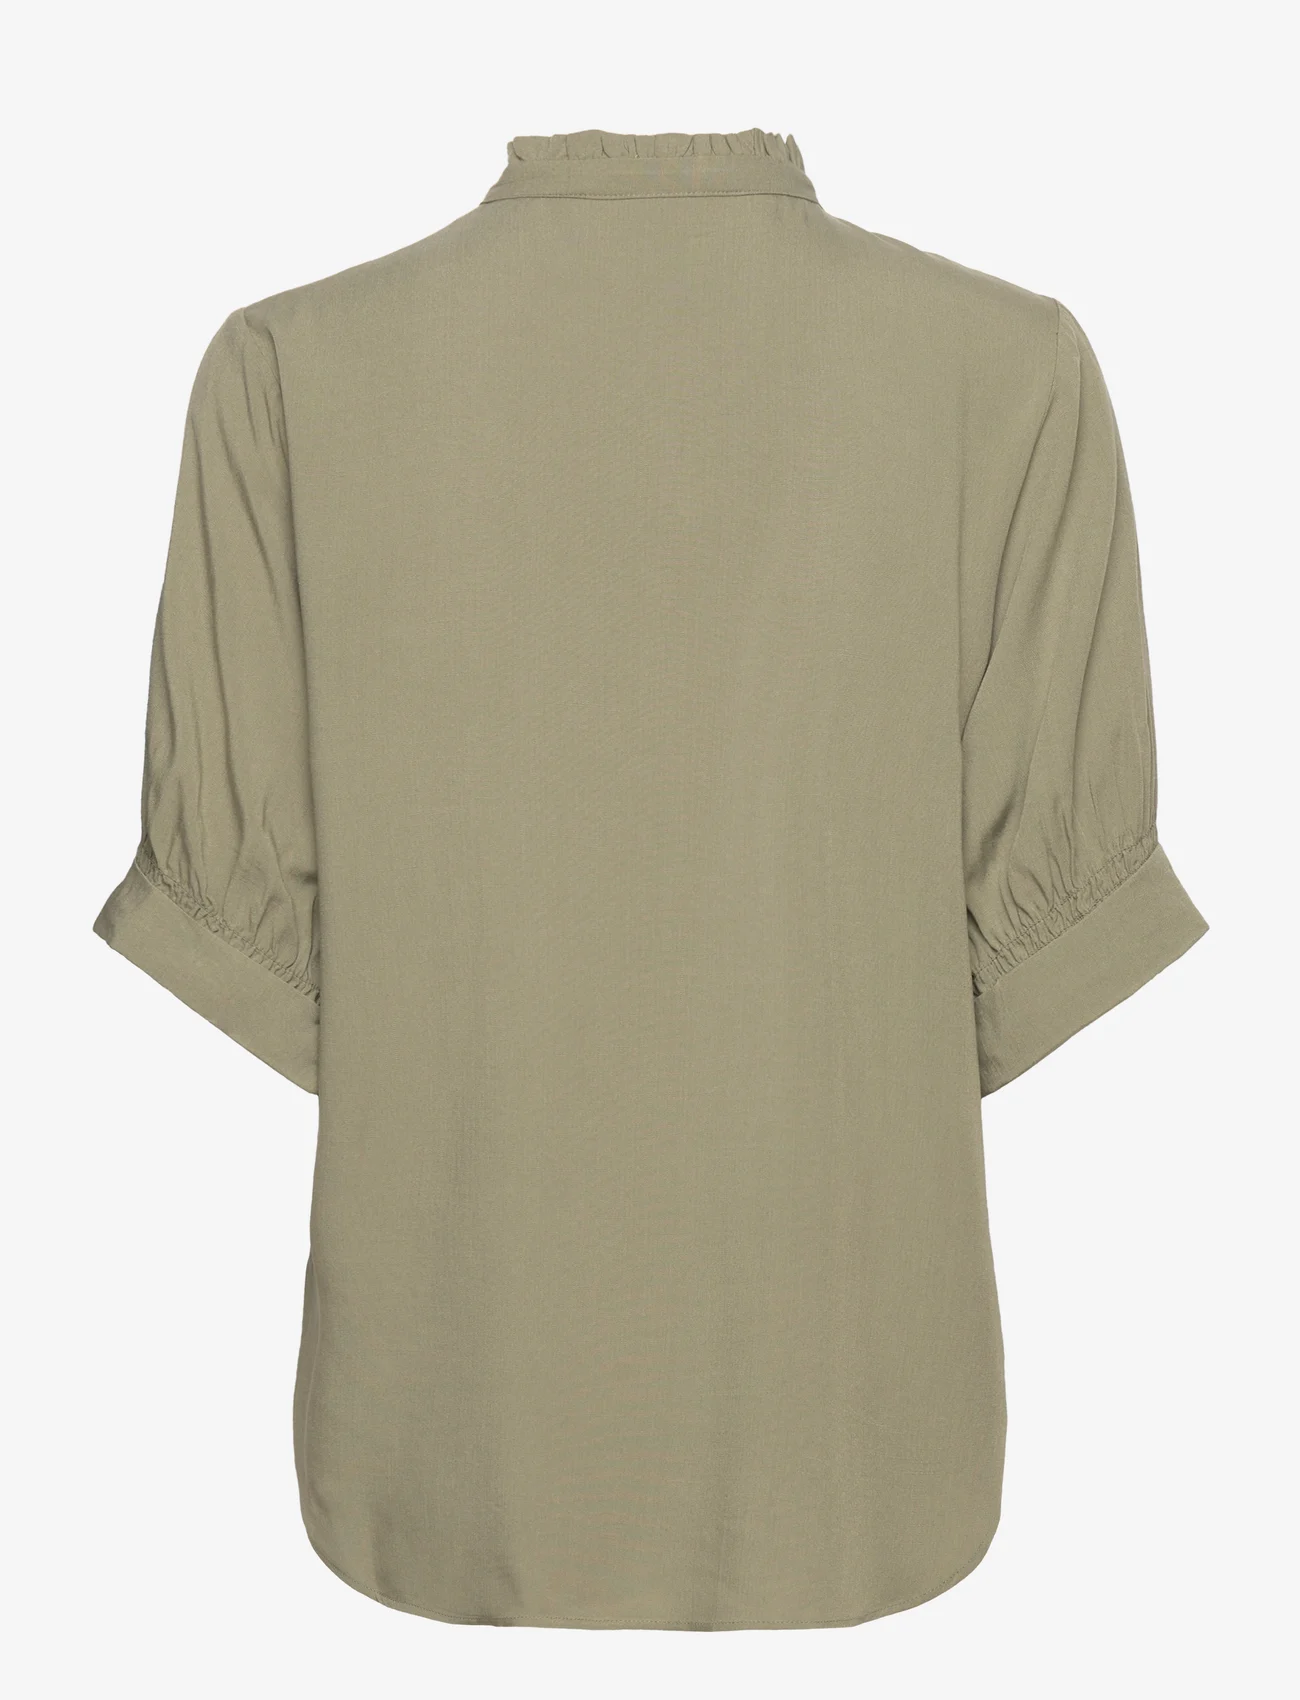 Soft Rebels - SRMatilda 2/4 Blouse - blouses korte mouwen - deep lichen green - 1